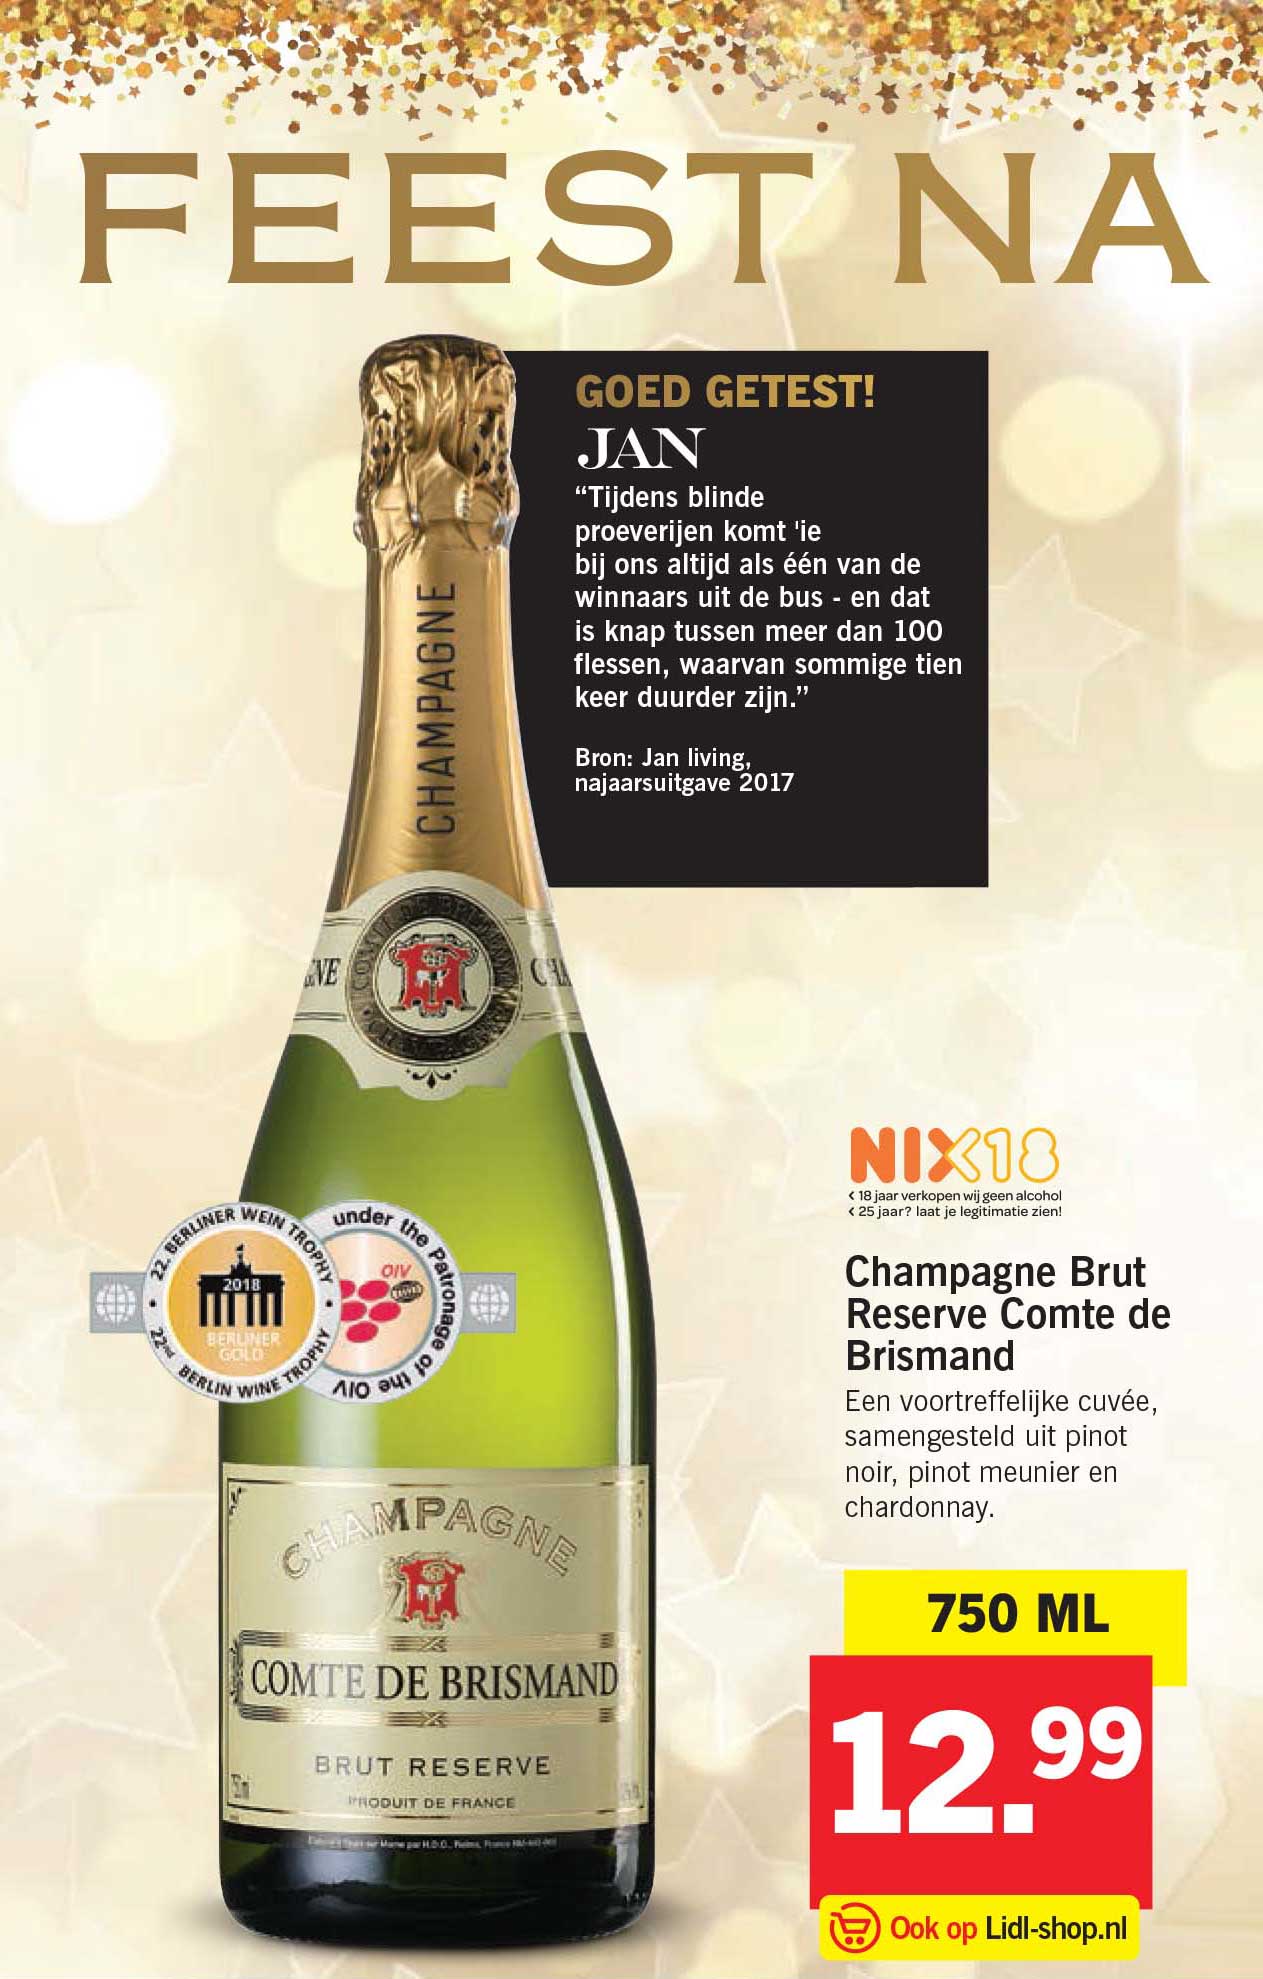 Champagne Brut Reserve Comte De Brismand Aanbieding bij Lidl